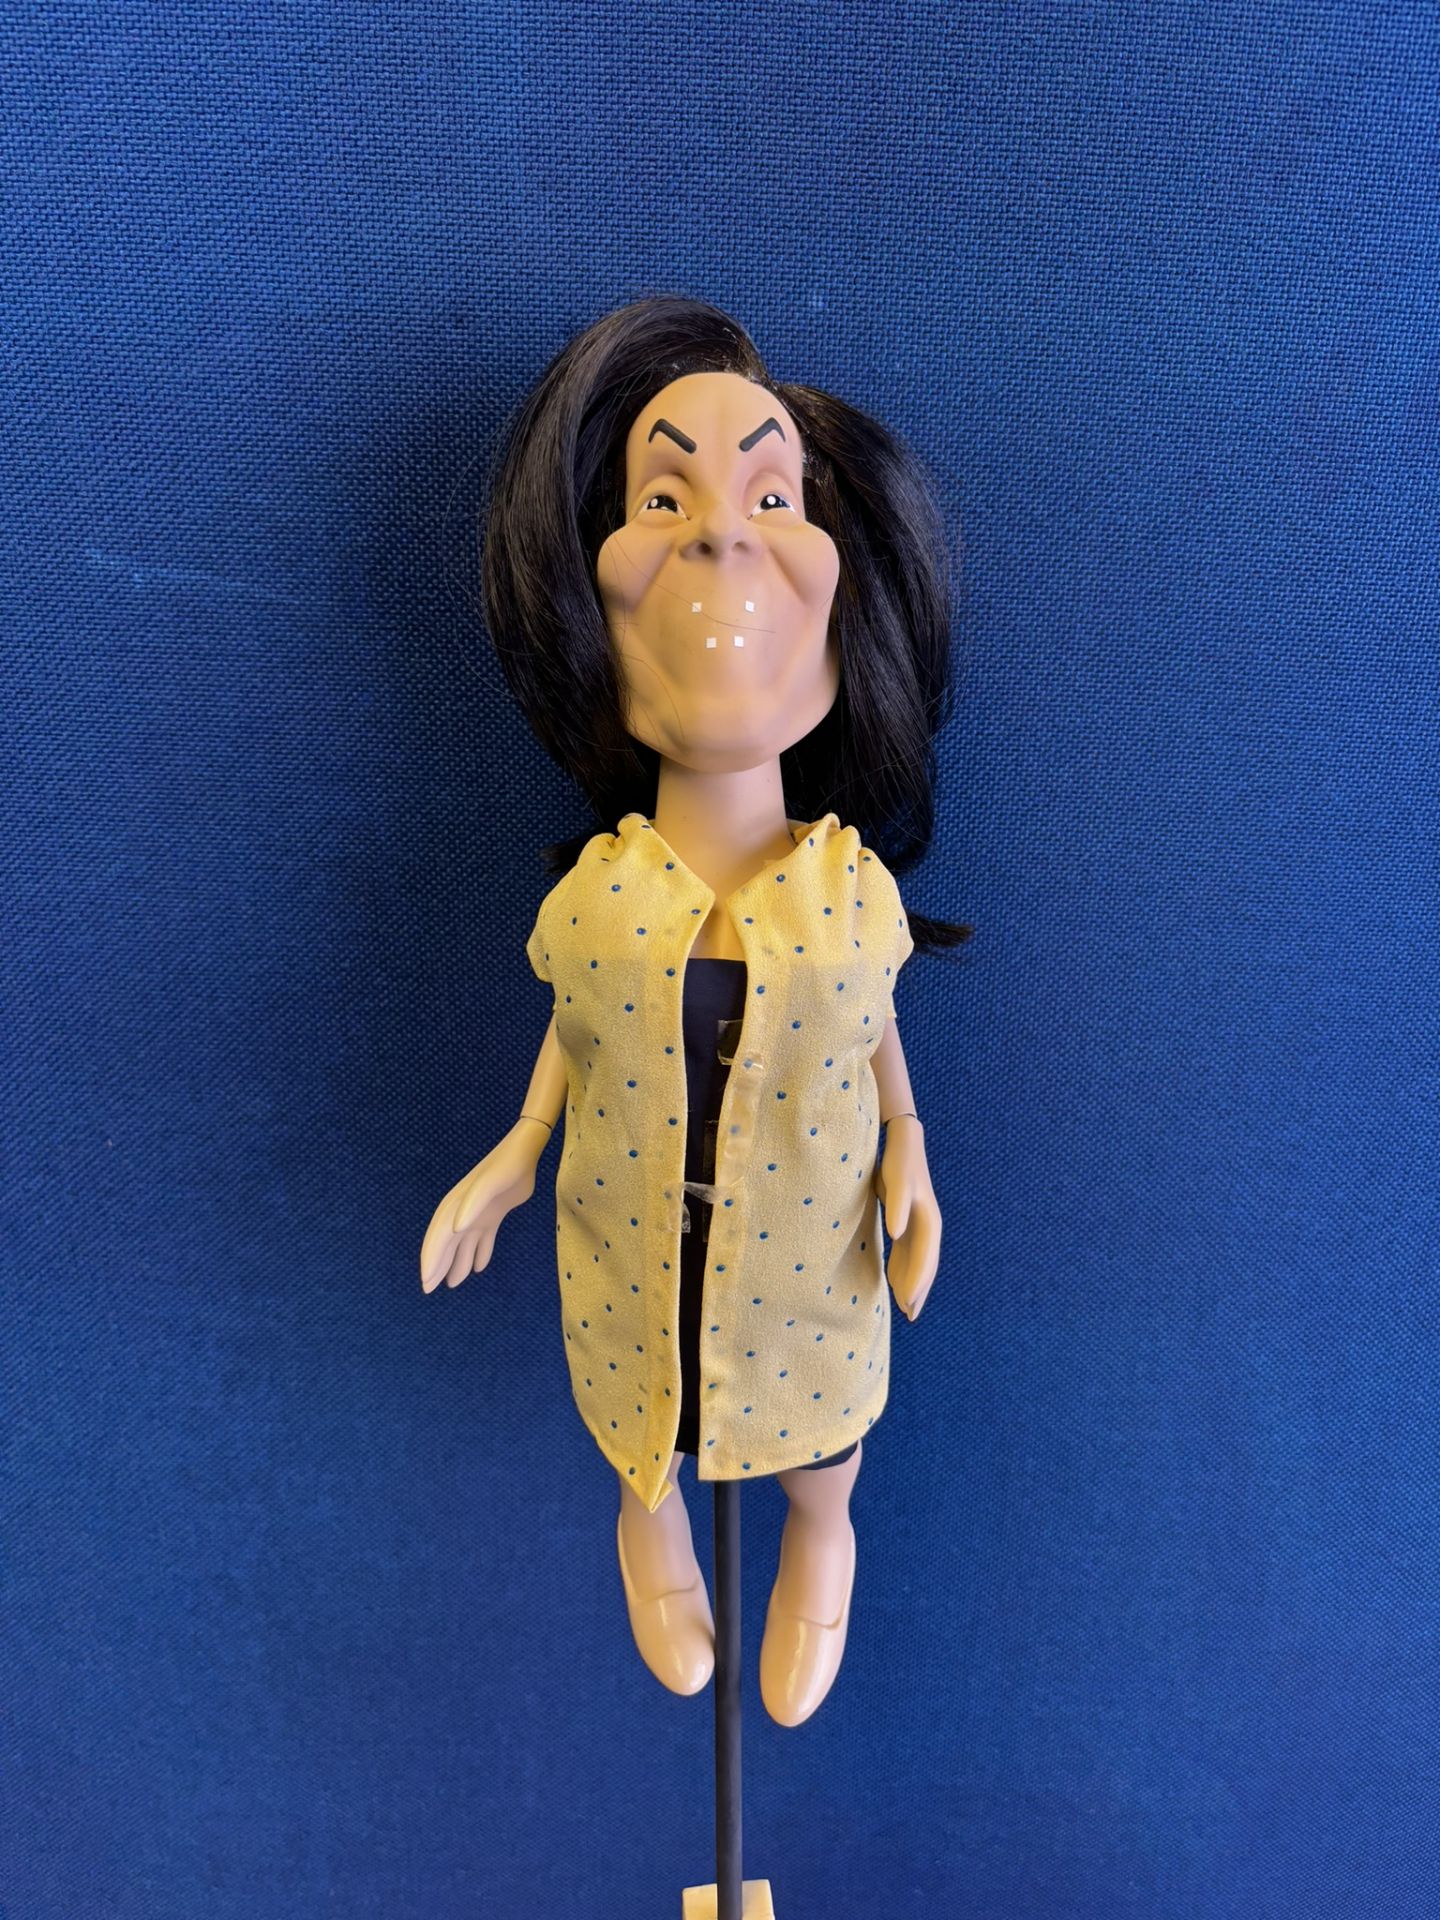 Newzoid puppet - Kirstie Allsopp - Image 2 of 4